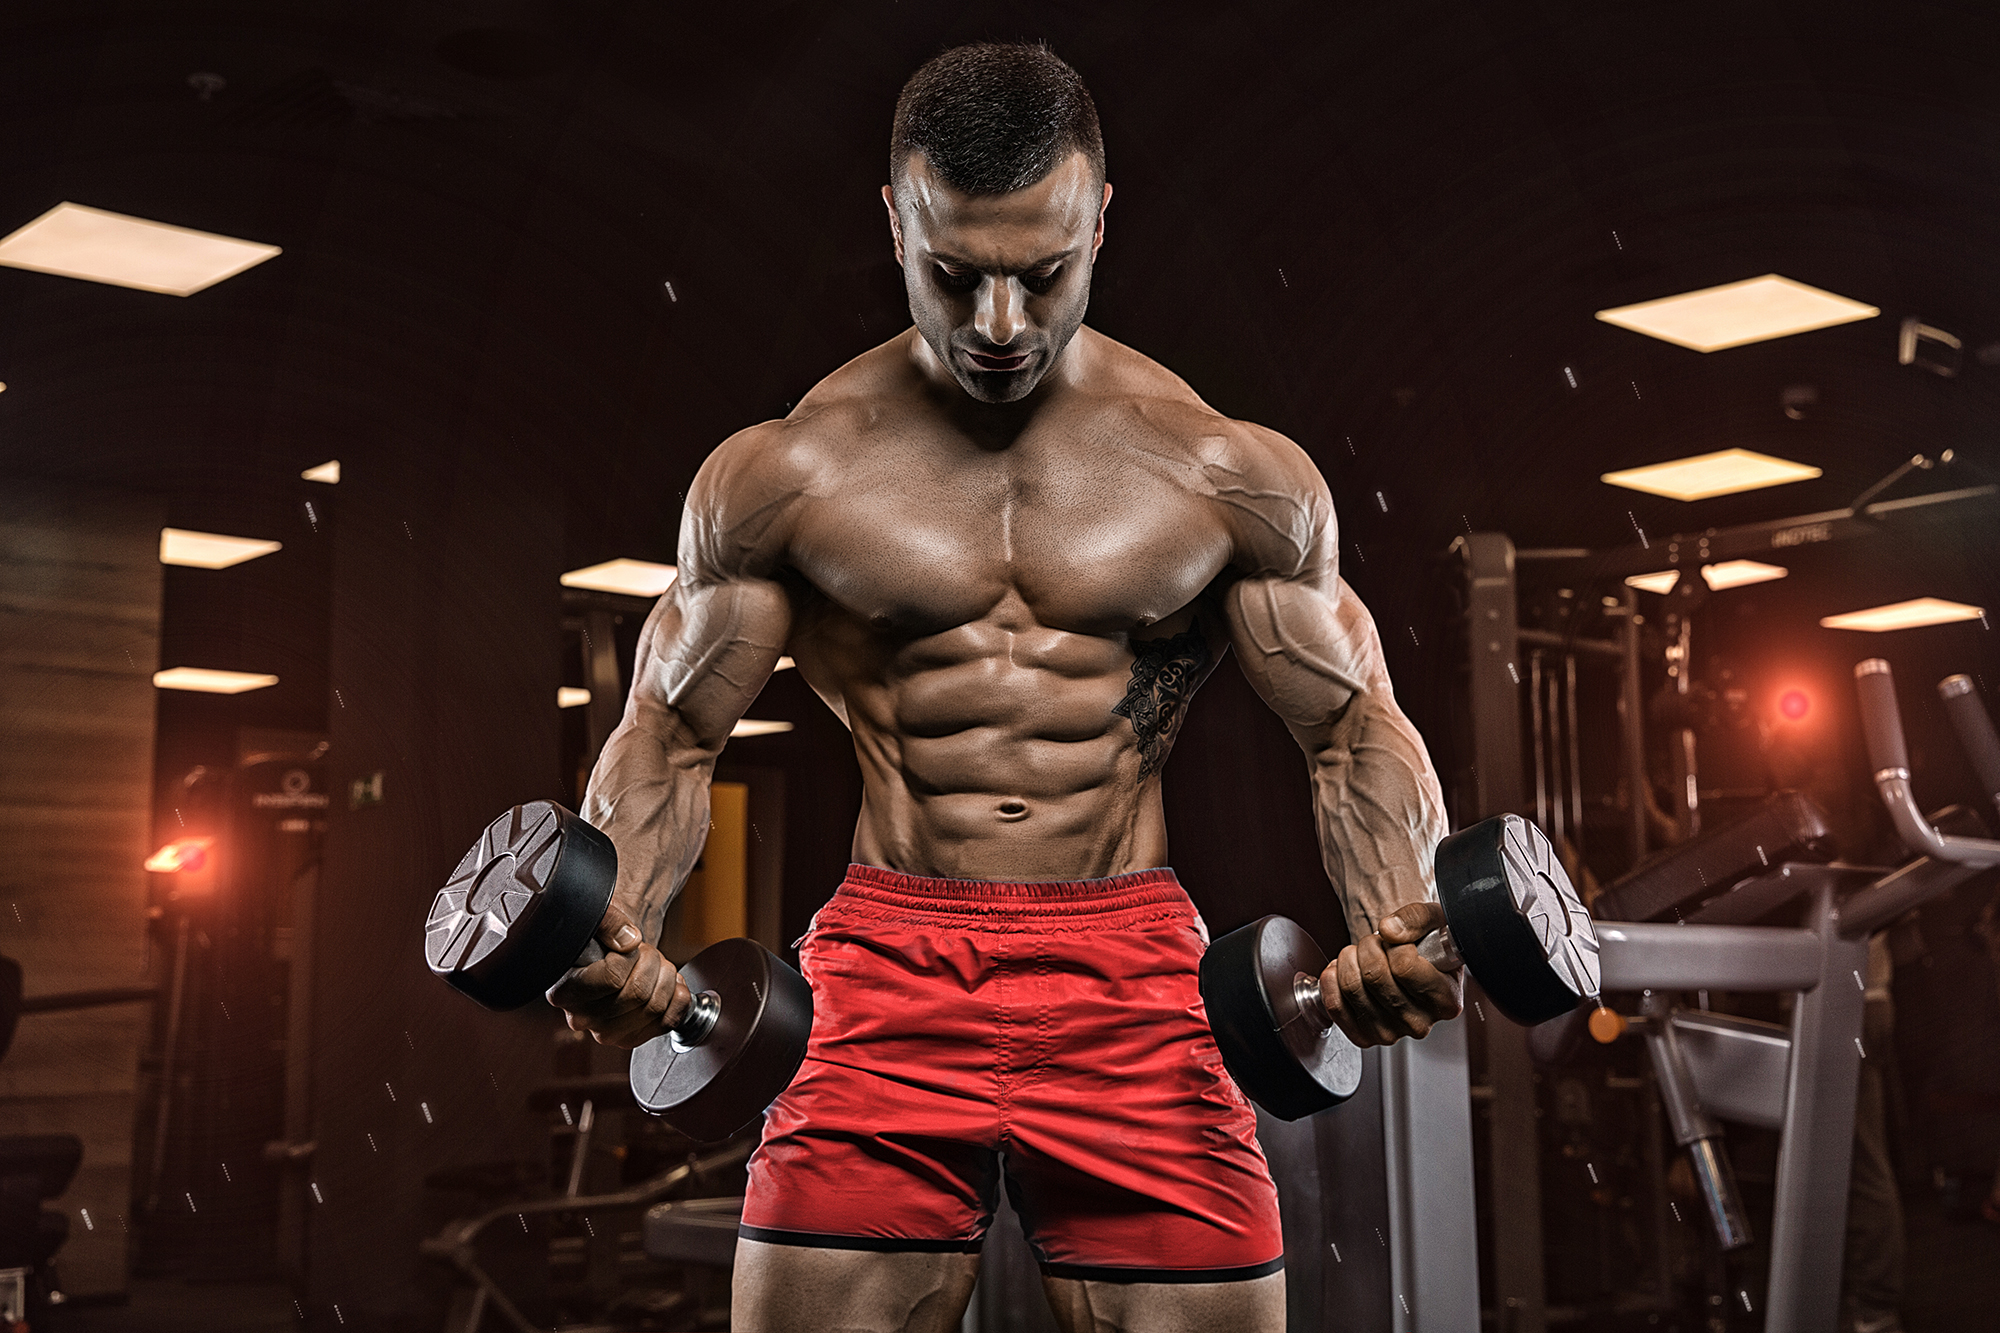 Bodybuilding supplements, SARMS